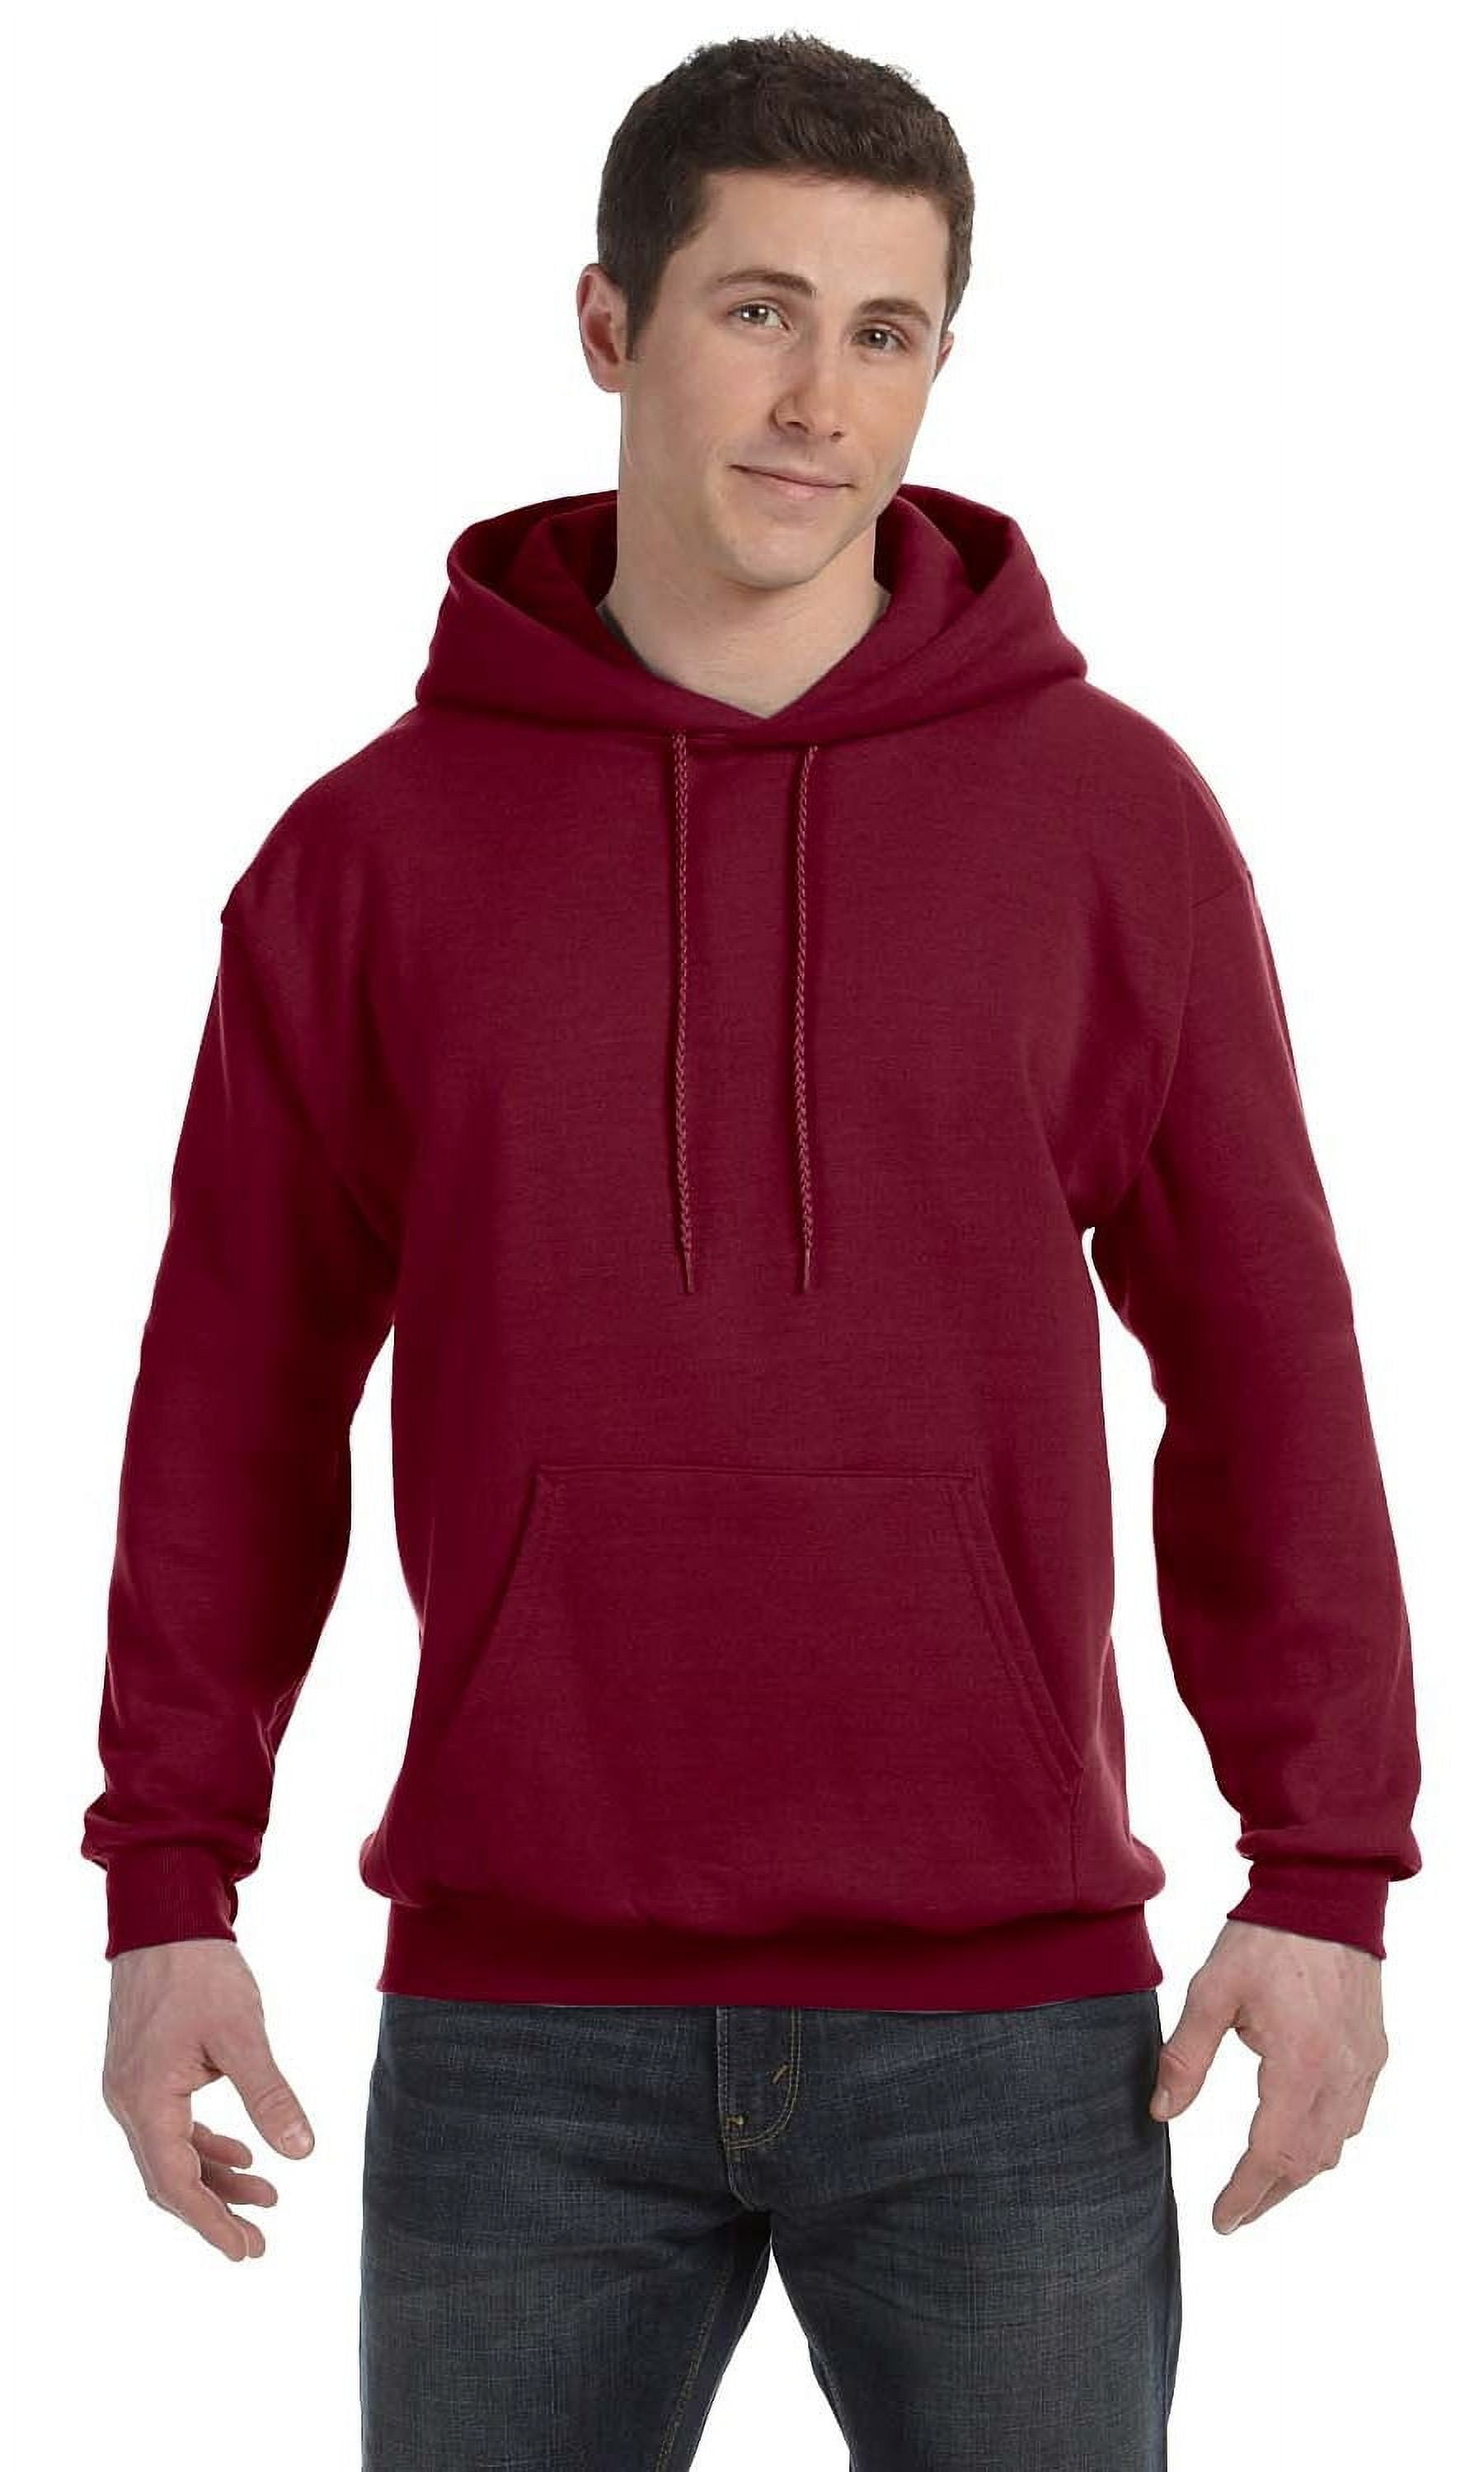 Hanes, The Unisex 7.8 oz., EcosmartÂ® 50/50 Pullover Hooded Sweatshirt -  HEATHER RED - S 